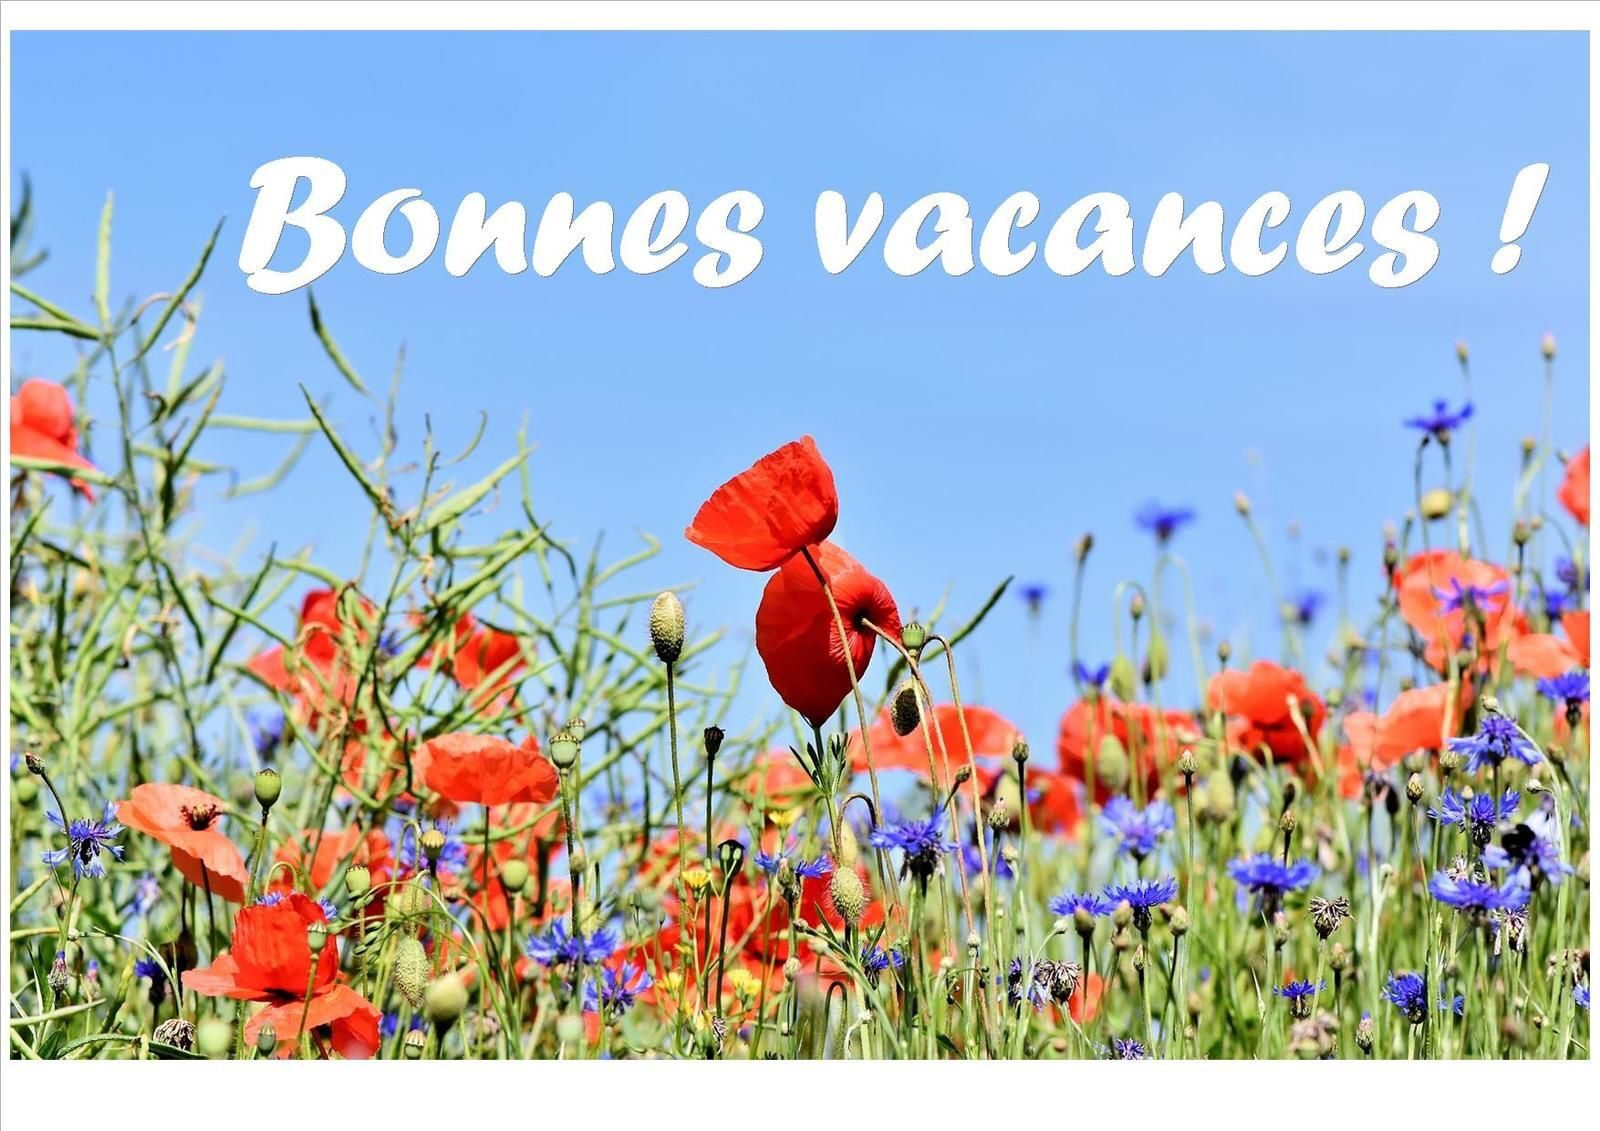 Bonnnes Vacances.jpg